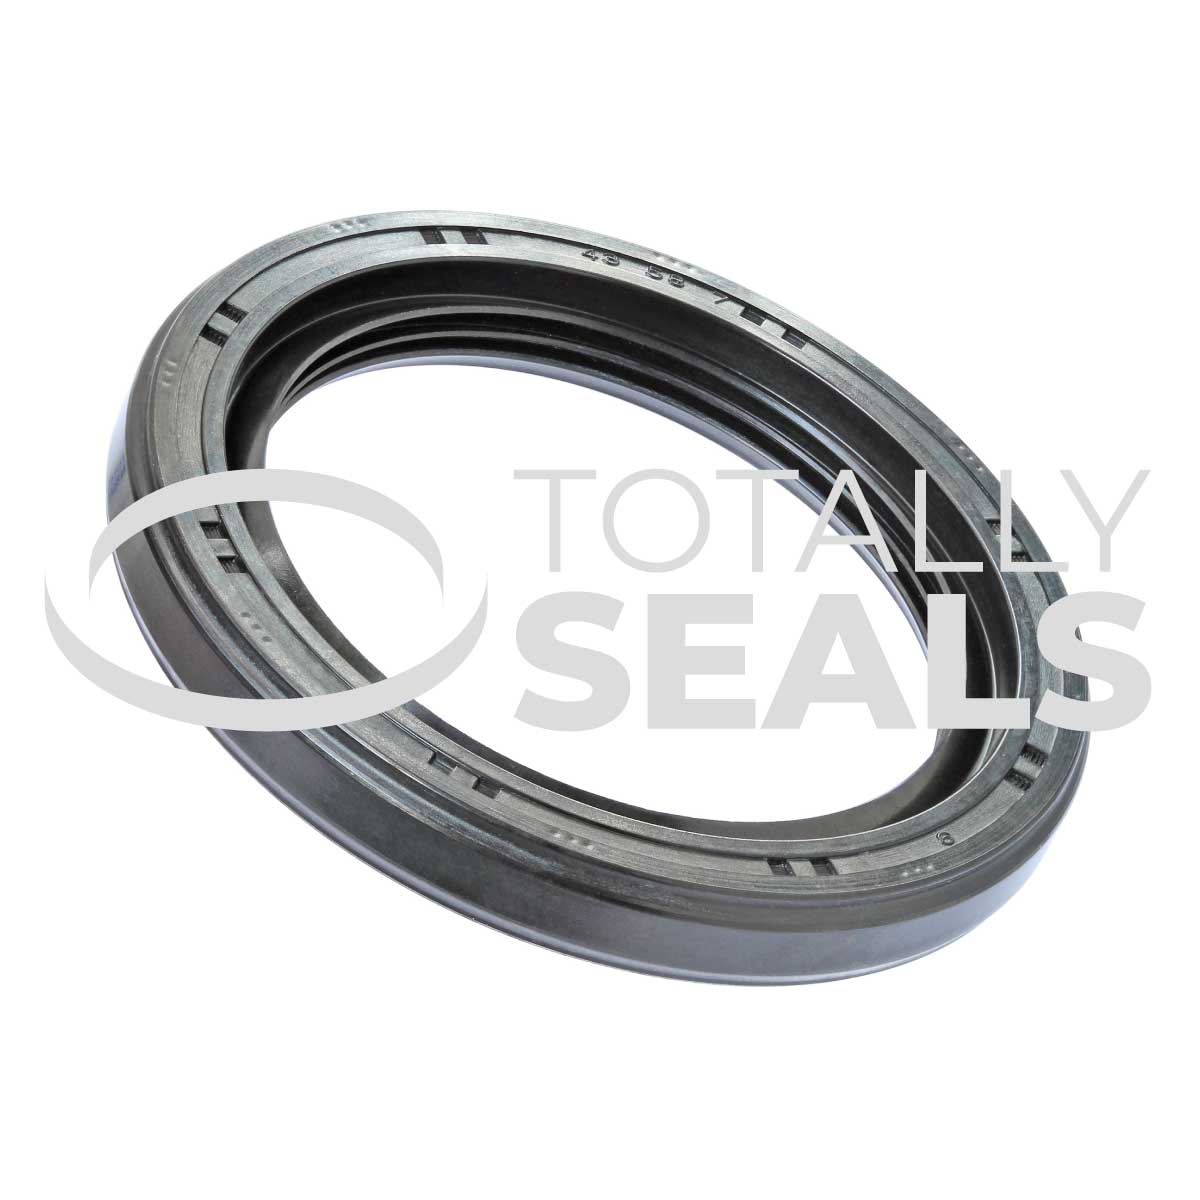 100mm x 120mm x 12mm - R23 (TC) Oil Seal - Totally Seals®